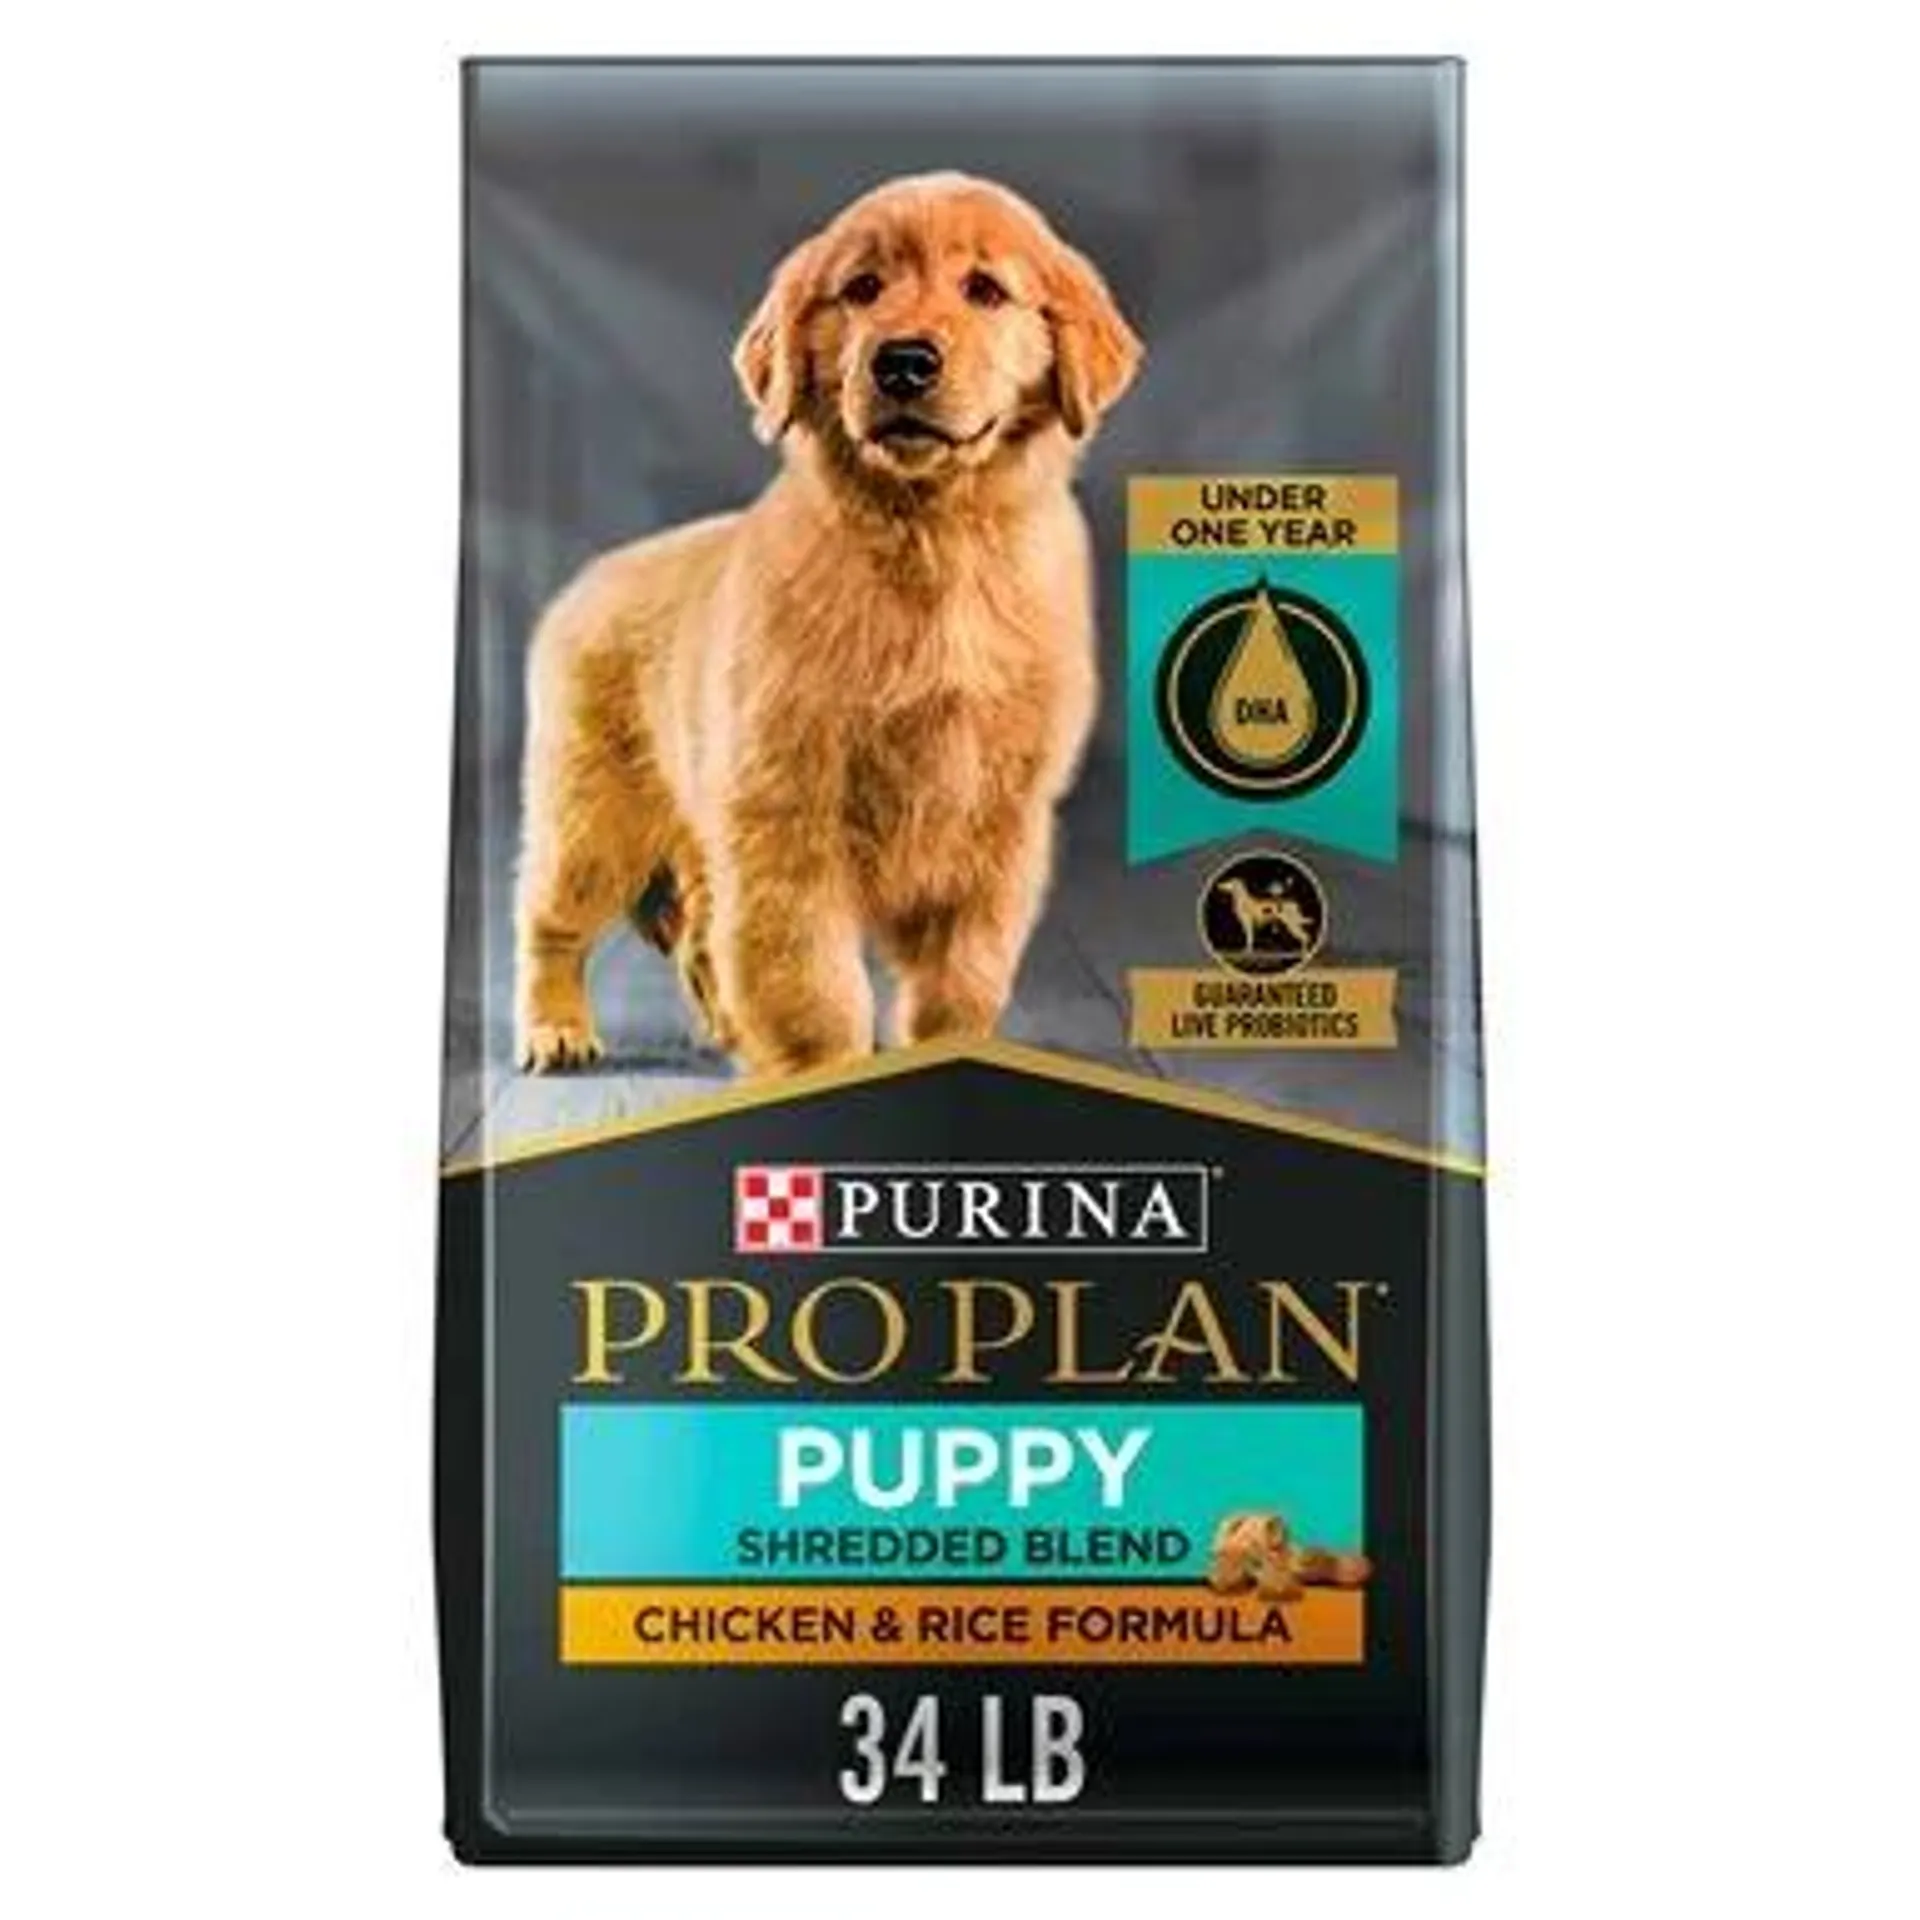 Purina Pro Plan High Protein Puppy Food Shredded Blend Chicken & Rice Formula - 34 Pound Bag